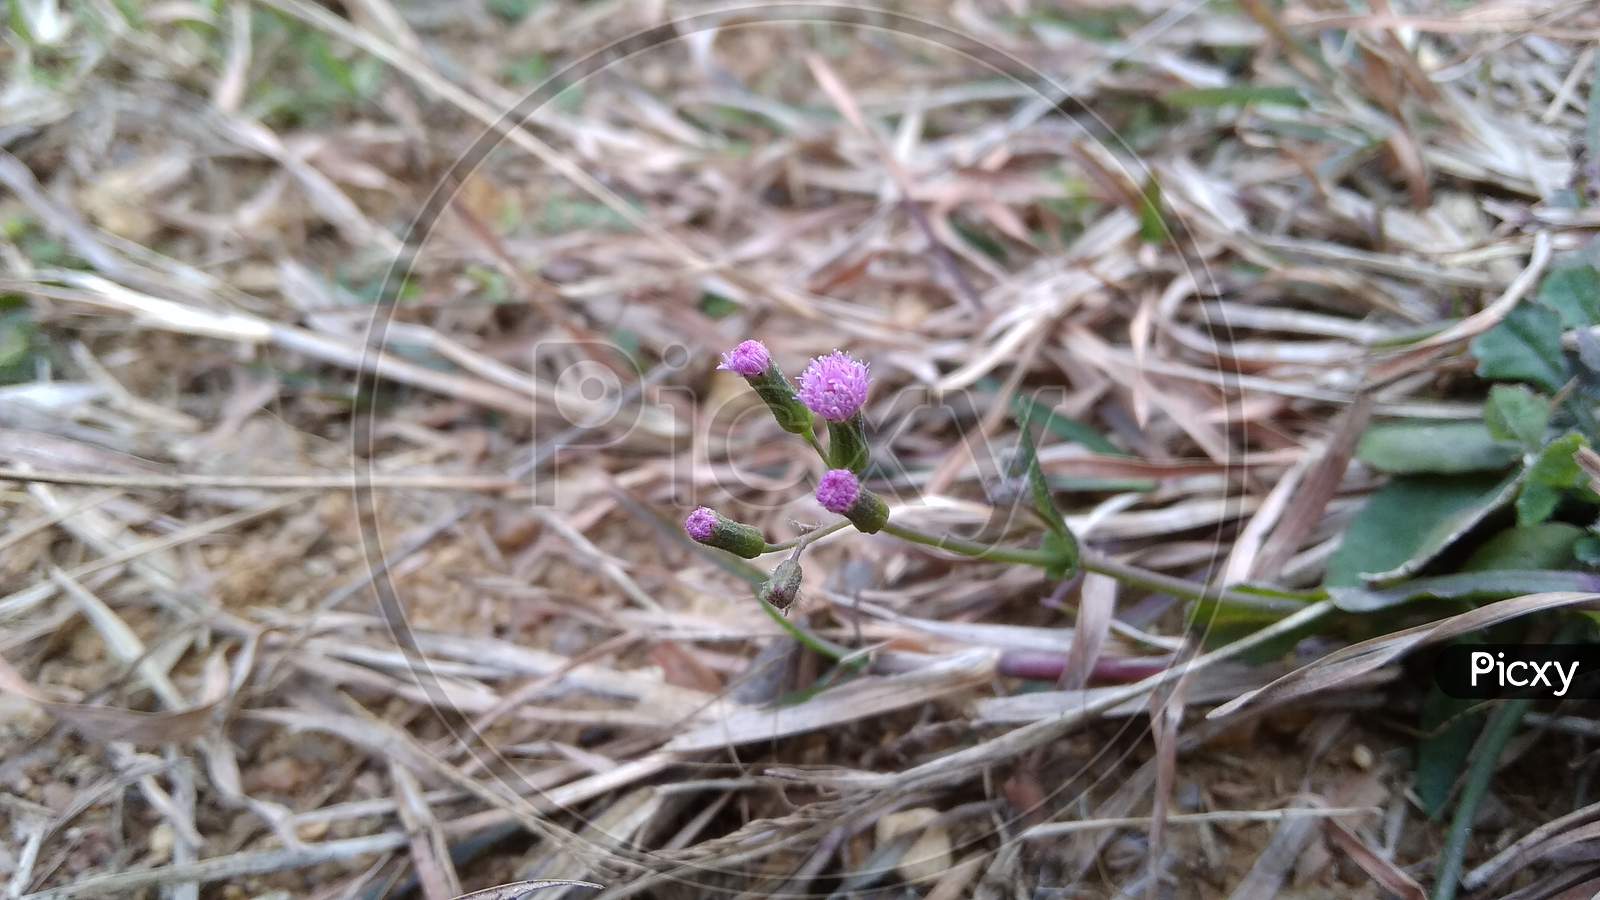 Crocus violet tiny flowering plant in selective focus